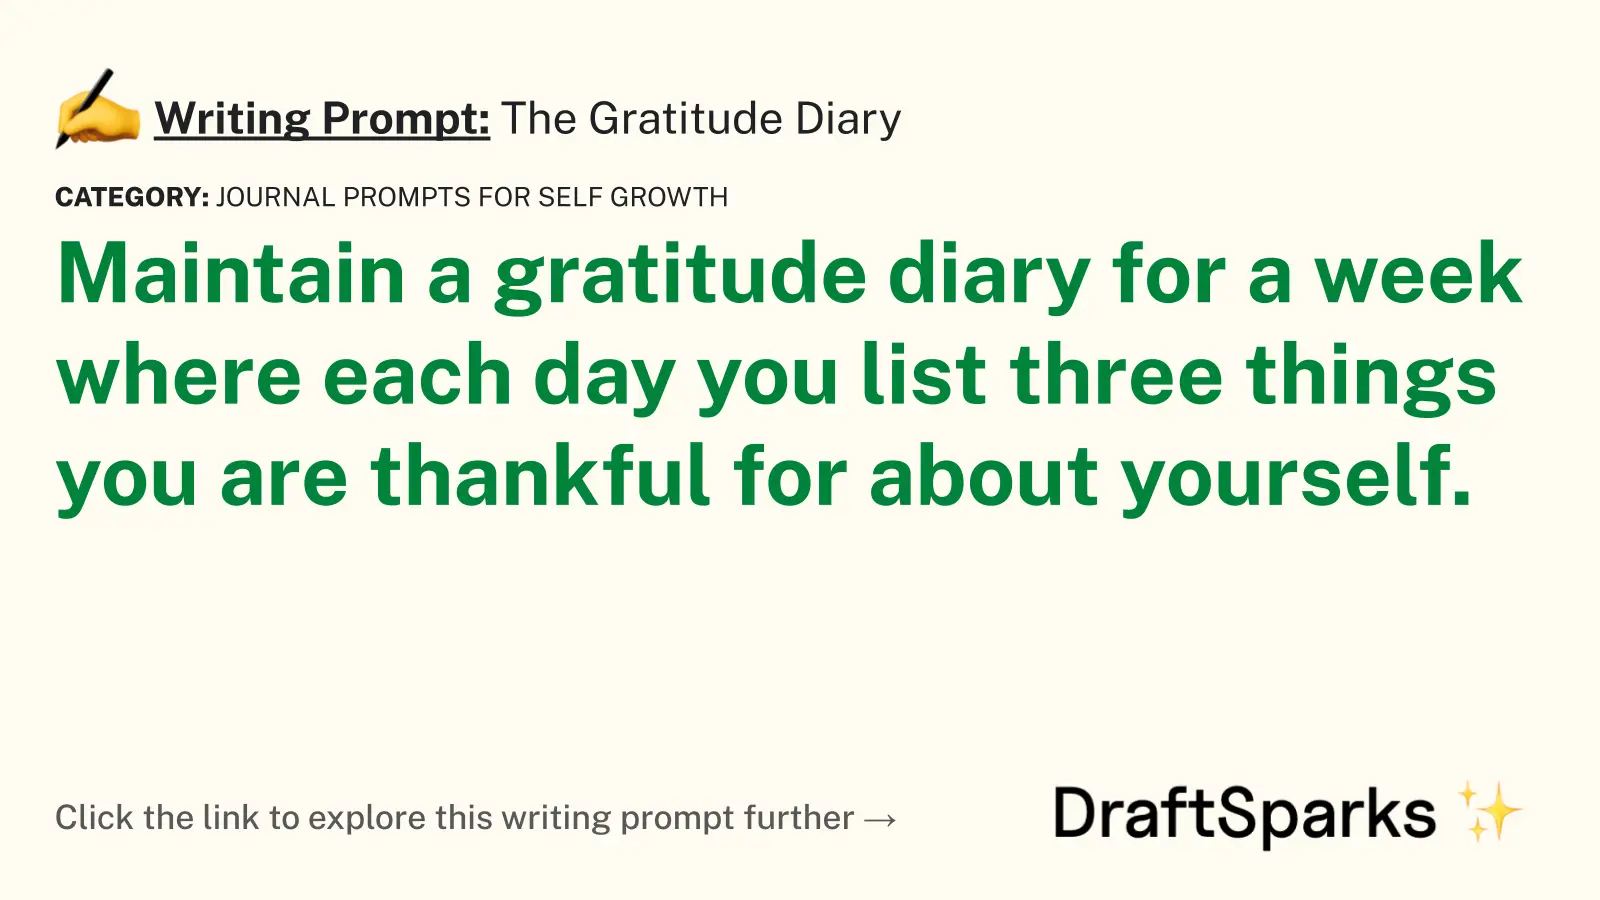 The Gratitude Diary